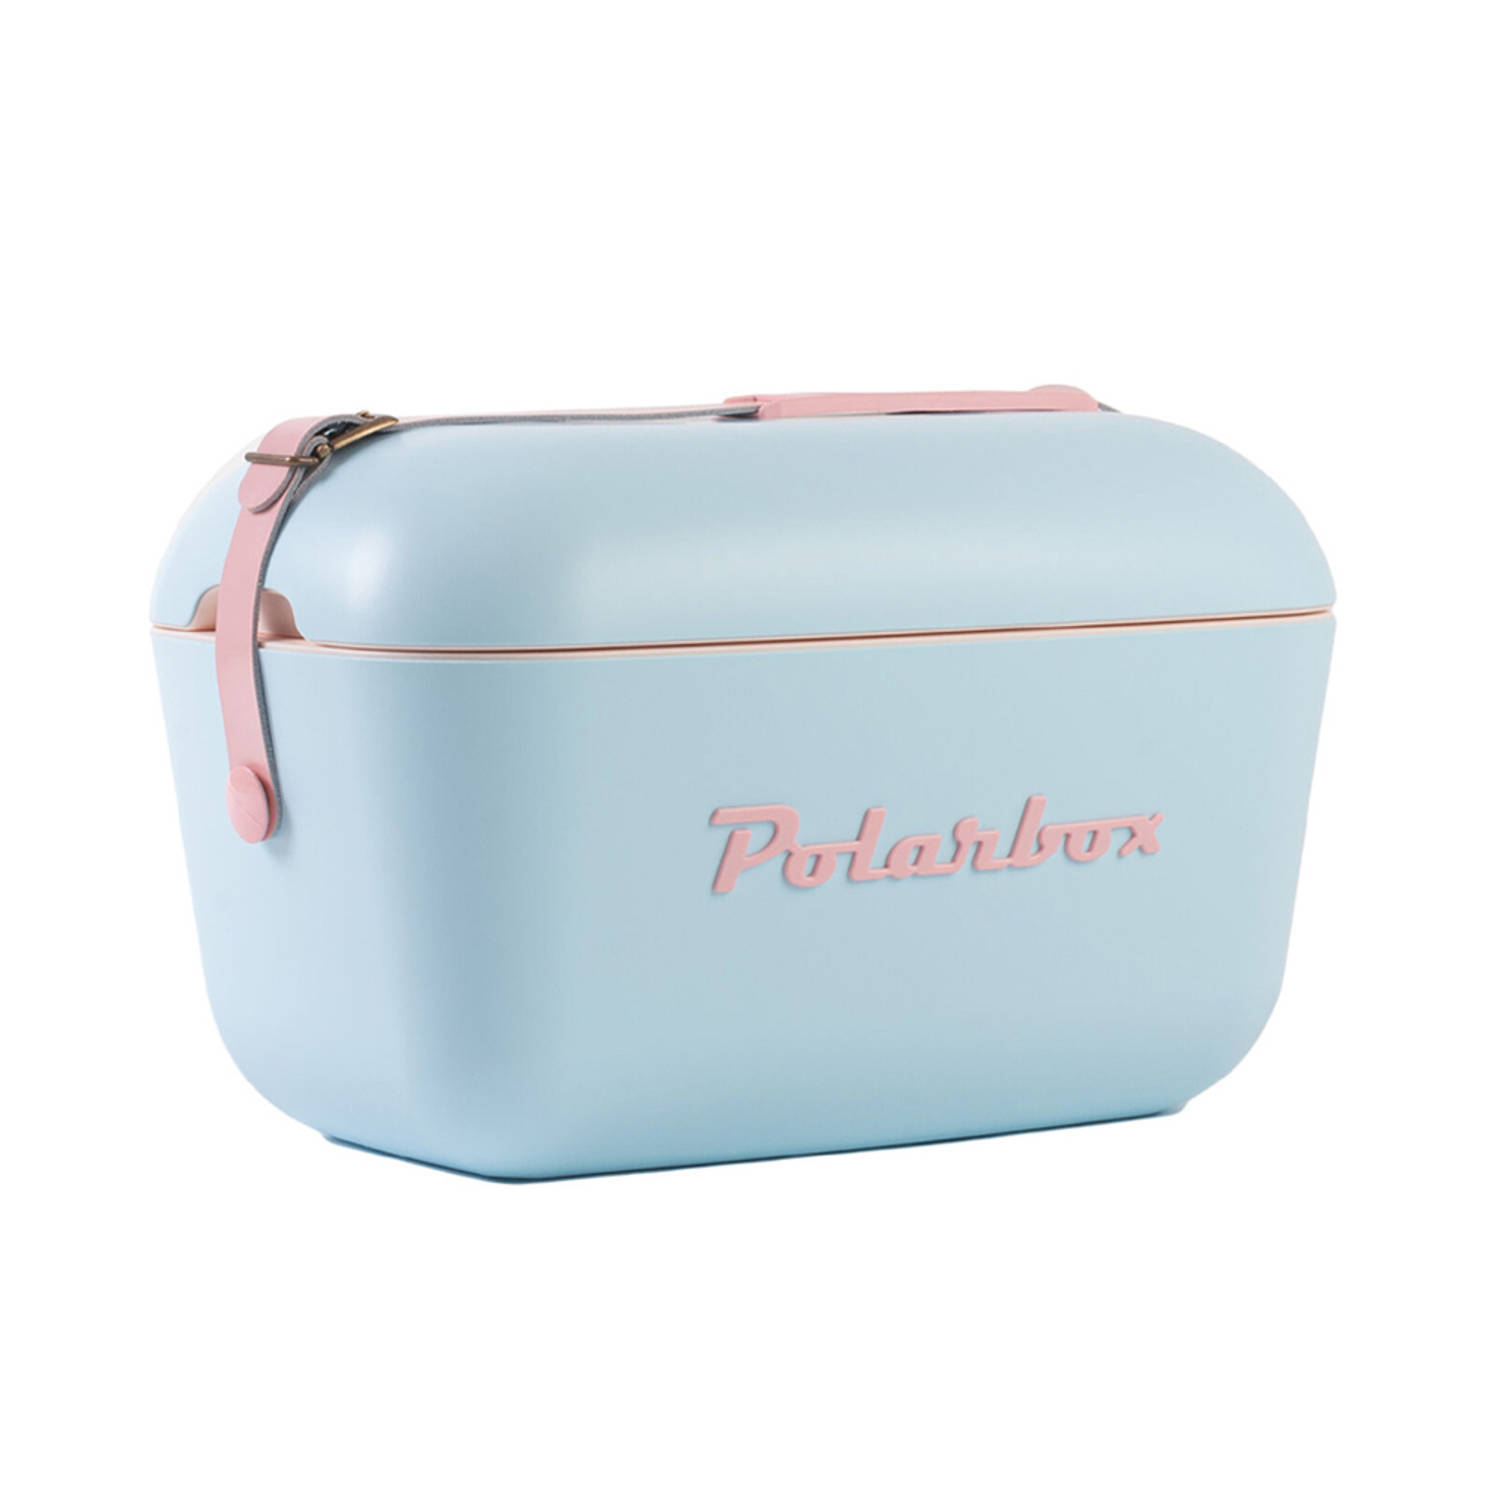 Polarbox Retro Koelbox Pop Blauw - Roze Band - 12 Liter Inhoud - Duurzaam Geproduceerd